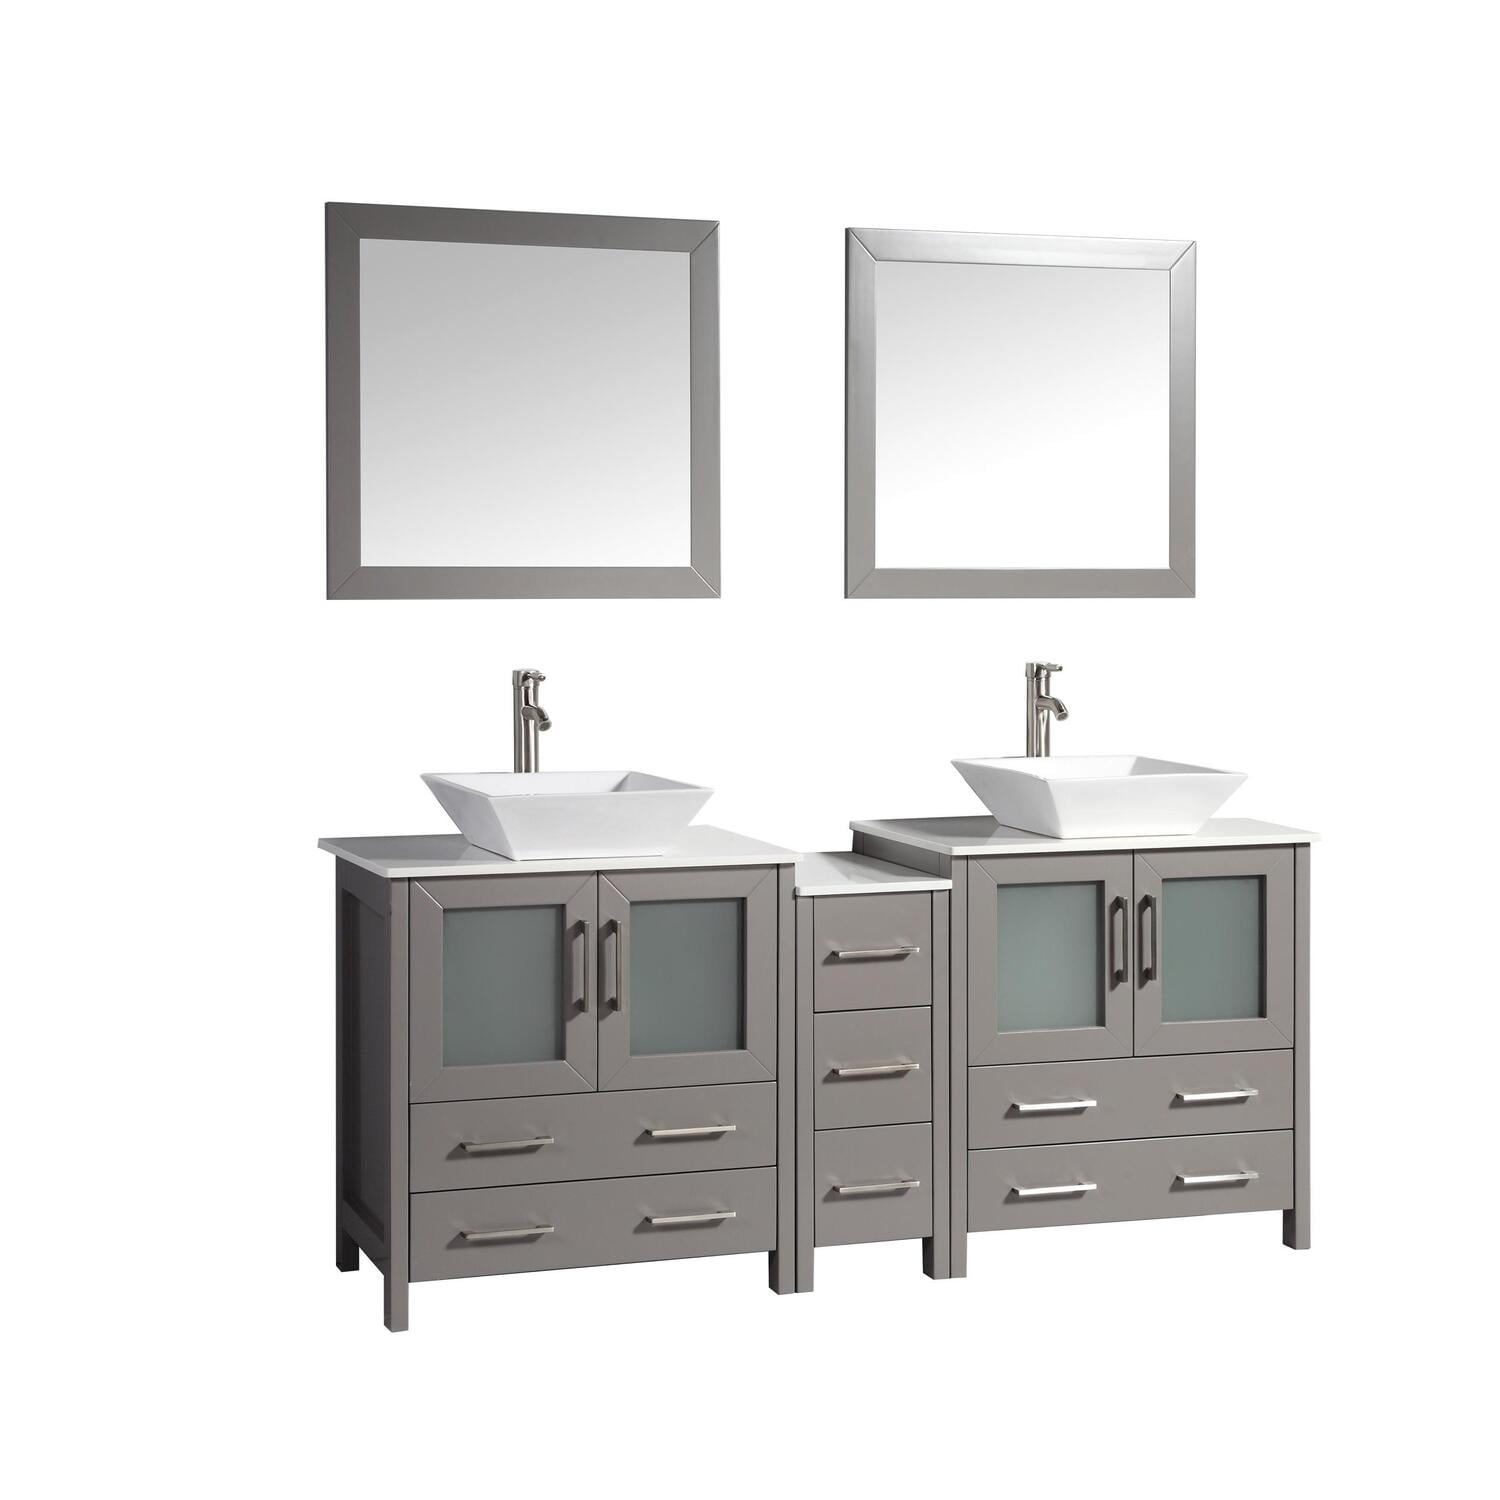 Vanity Art 72 Inch Double Sink Bathroom, 72 Inch Granite Vanity Top Double Sink